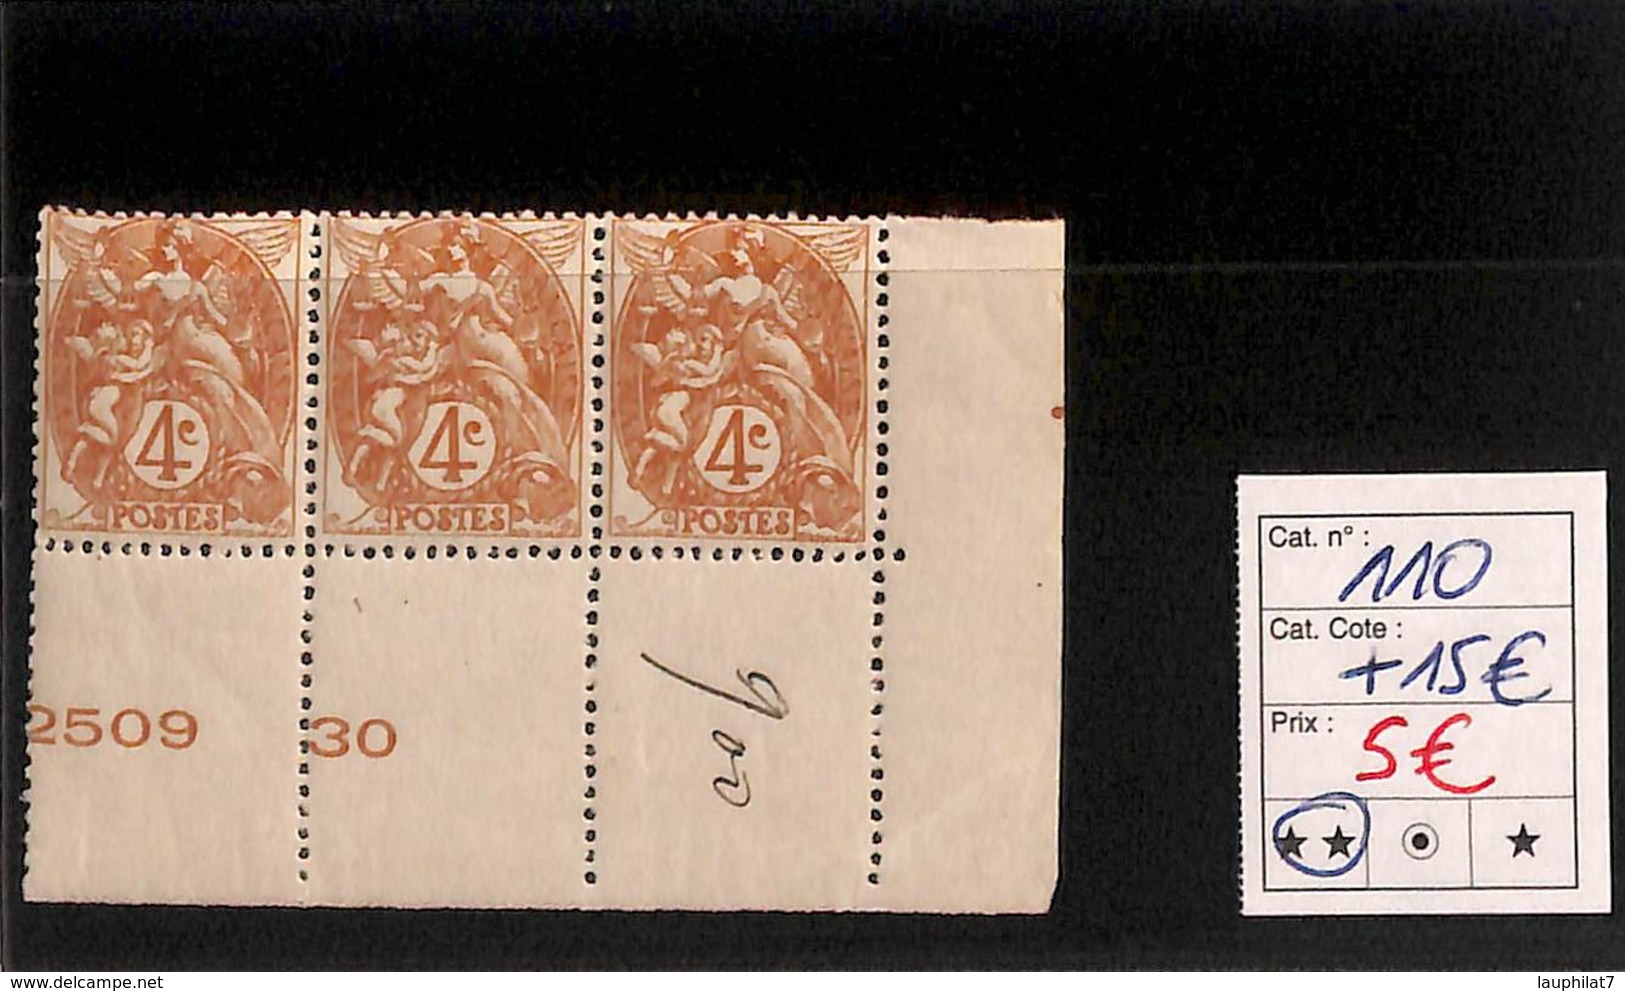 [816485]France 1900 - N° 110, 4c Brun-jaune, Inscriptions Marginales, Triplette, Cdf - 1900-29 Blanc